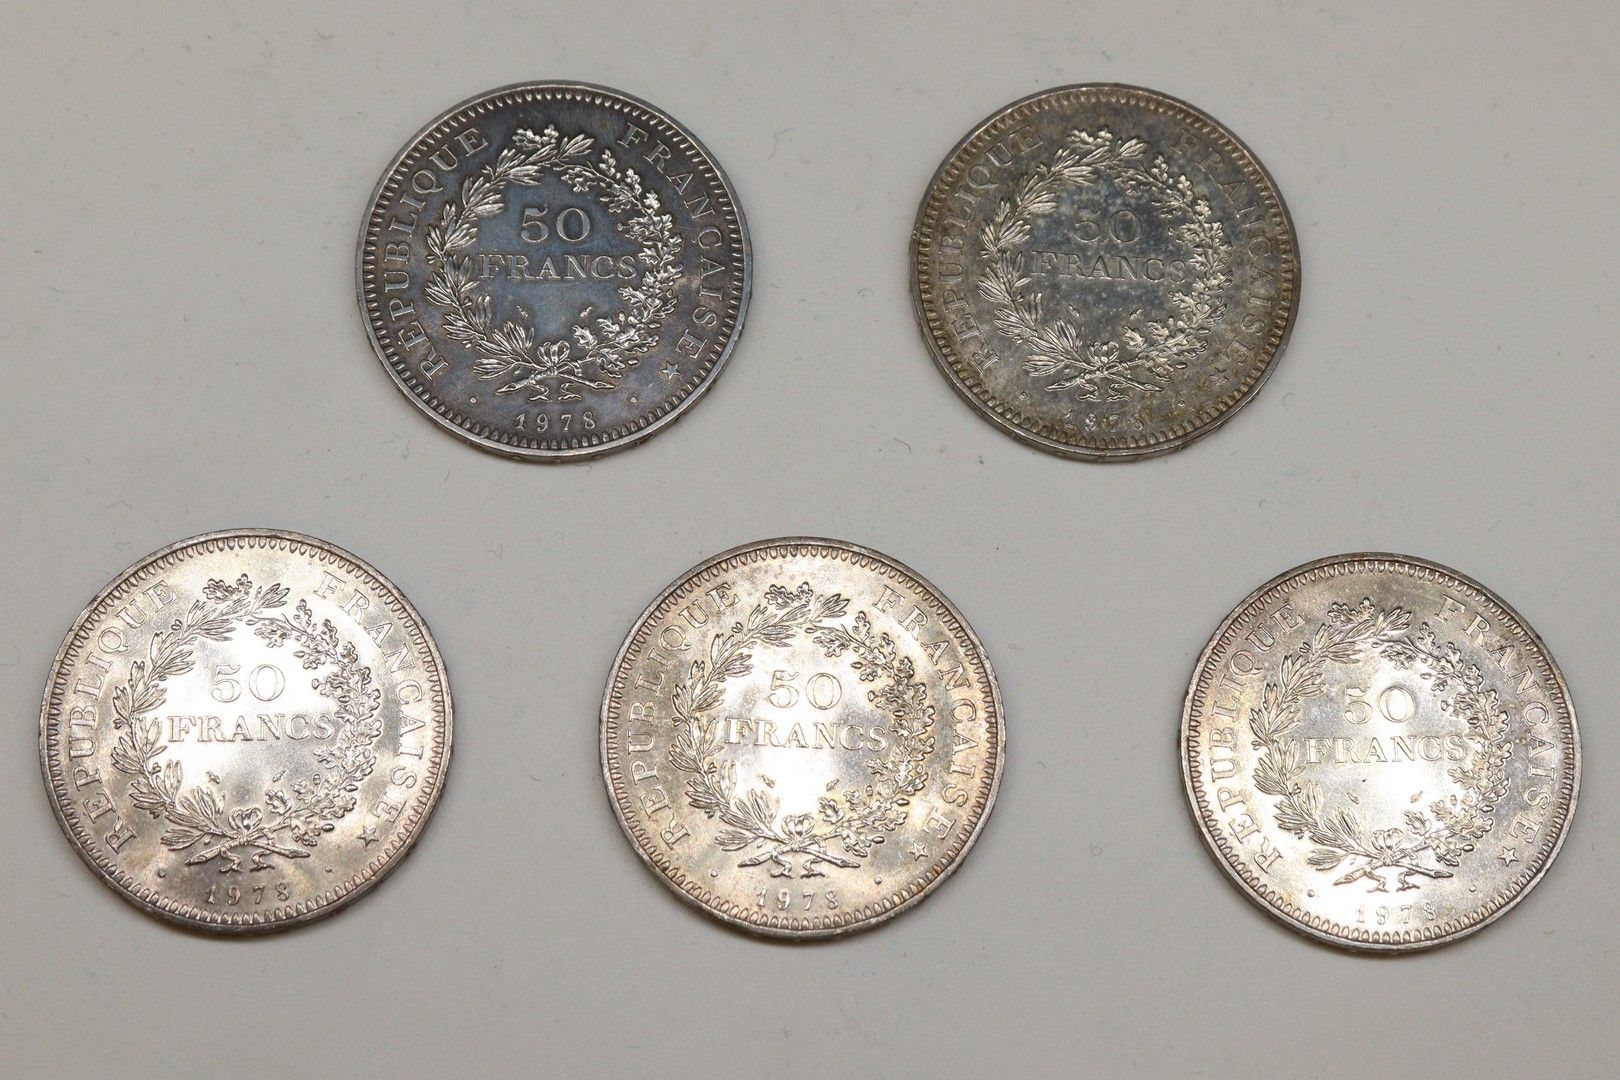 Null Lote de 5 monedas de 50 francos de Hércules (1978)

VG a TTB

Peso : 150,04&hellip;